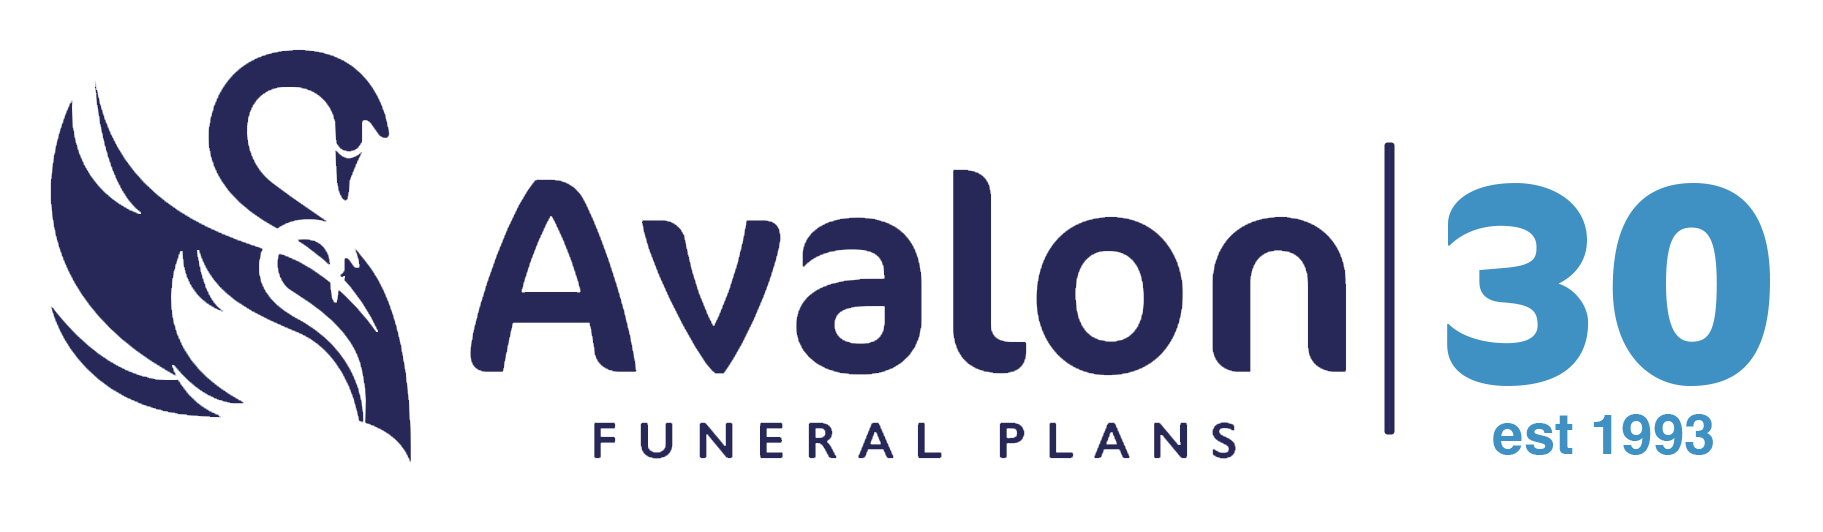 The 30th anniversary Avalon logo